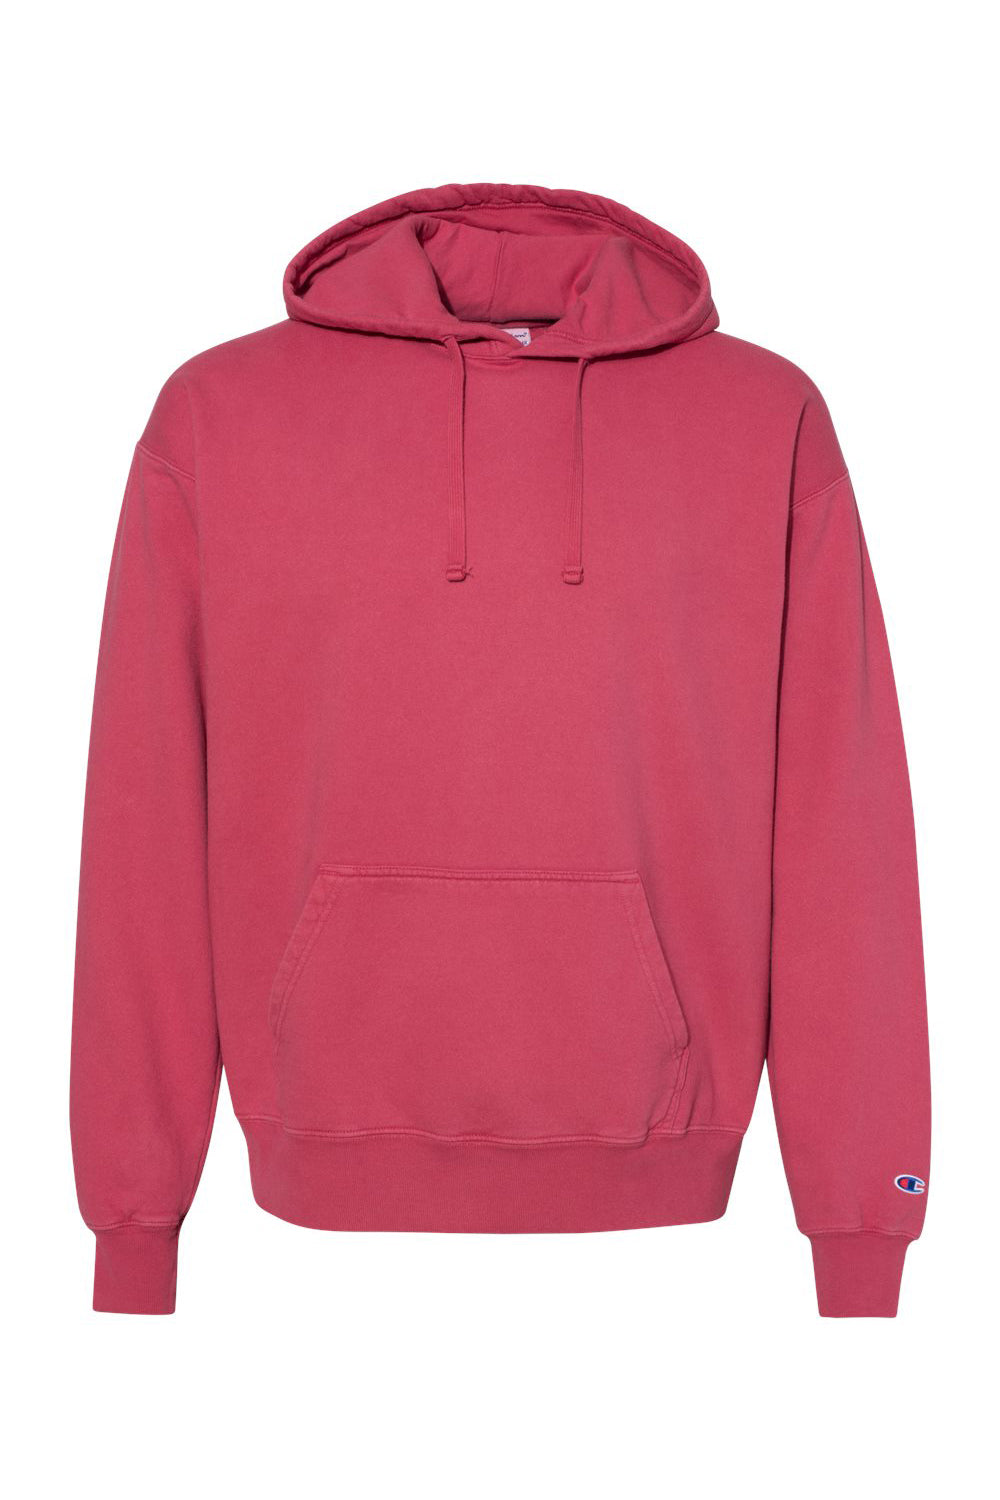 Champion CD450 Mens Garment Dyed Hooded Sweatshirt Hoodie Crimson Red Flat Front